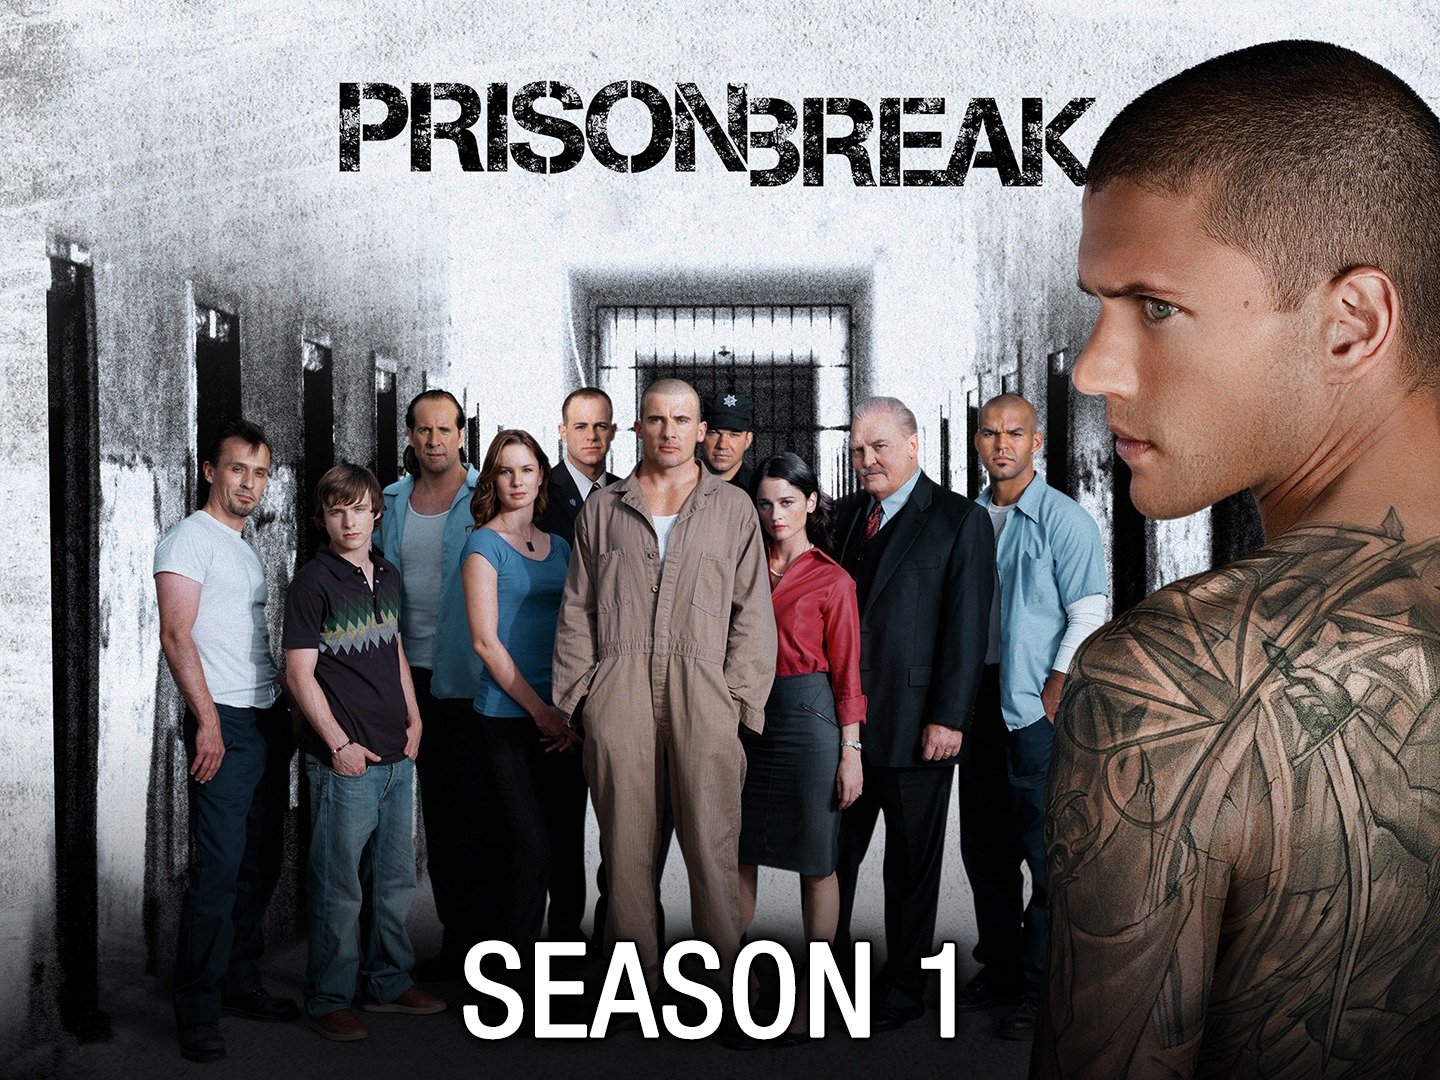 prison break season 1 english subtitles download